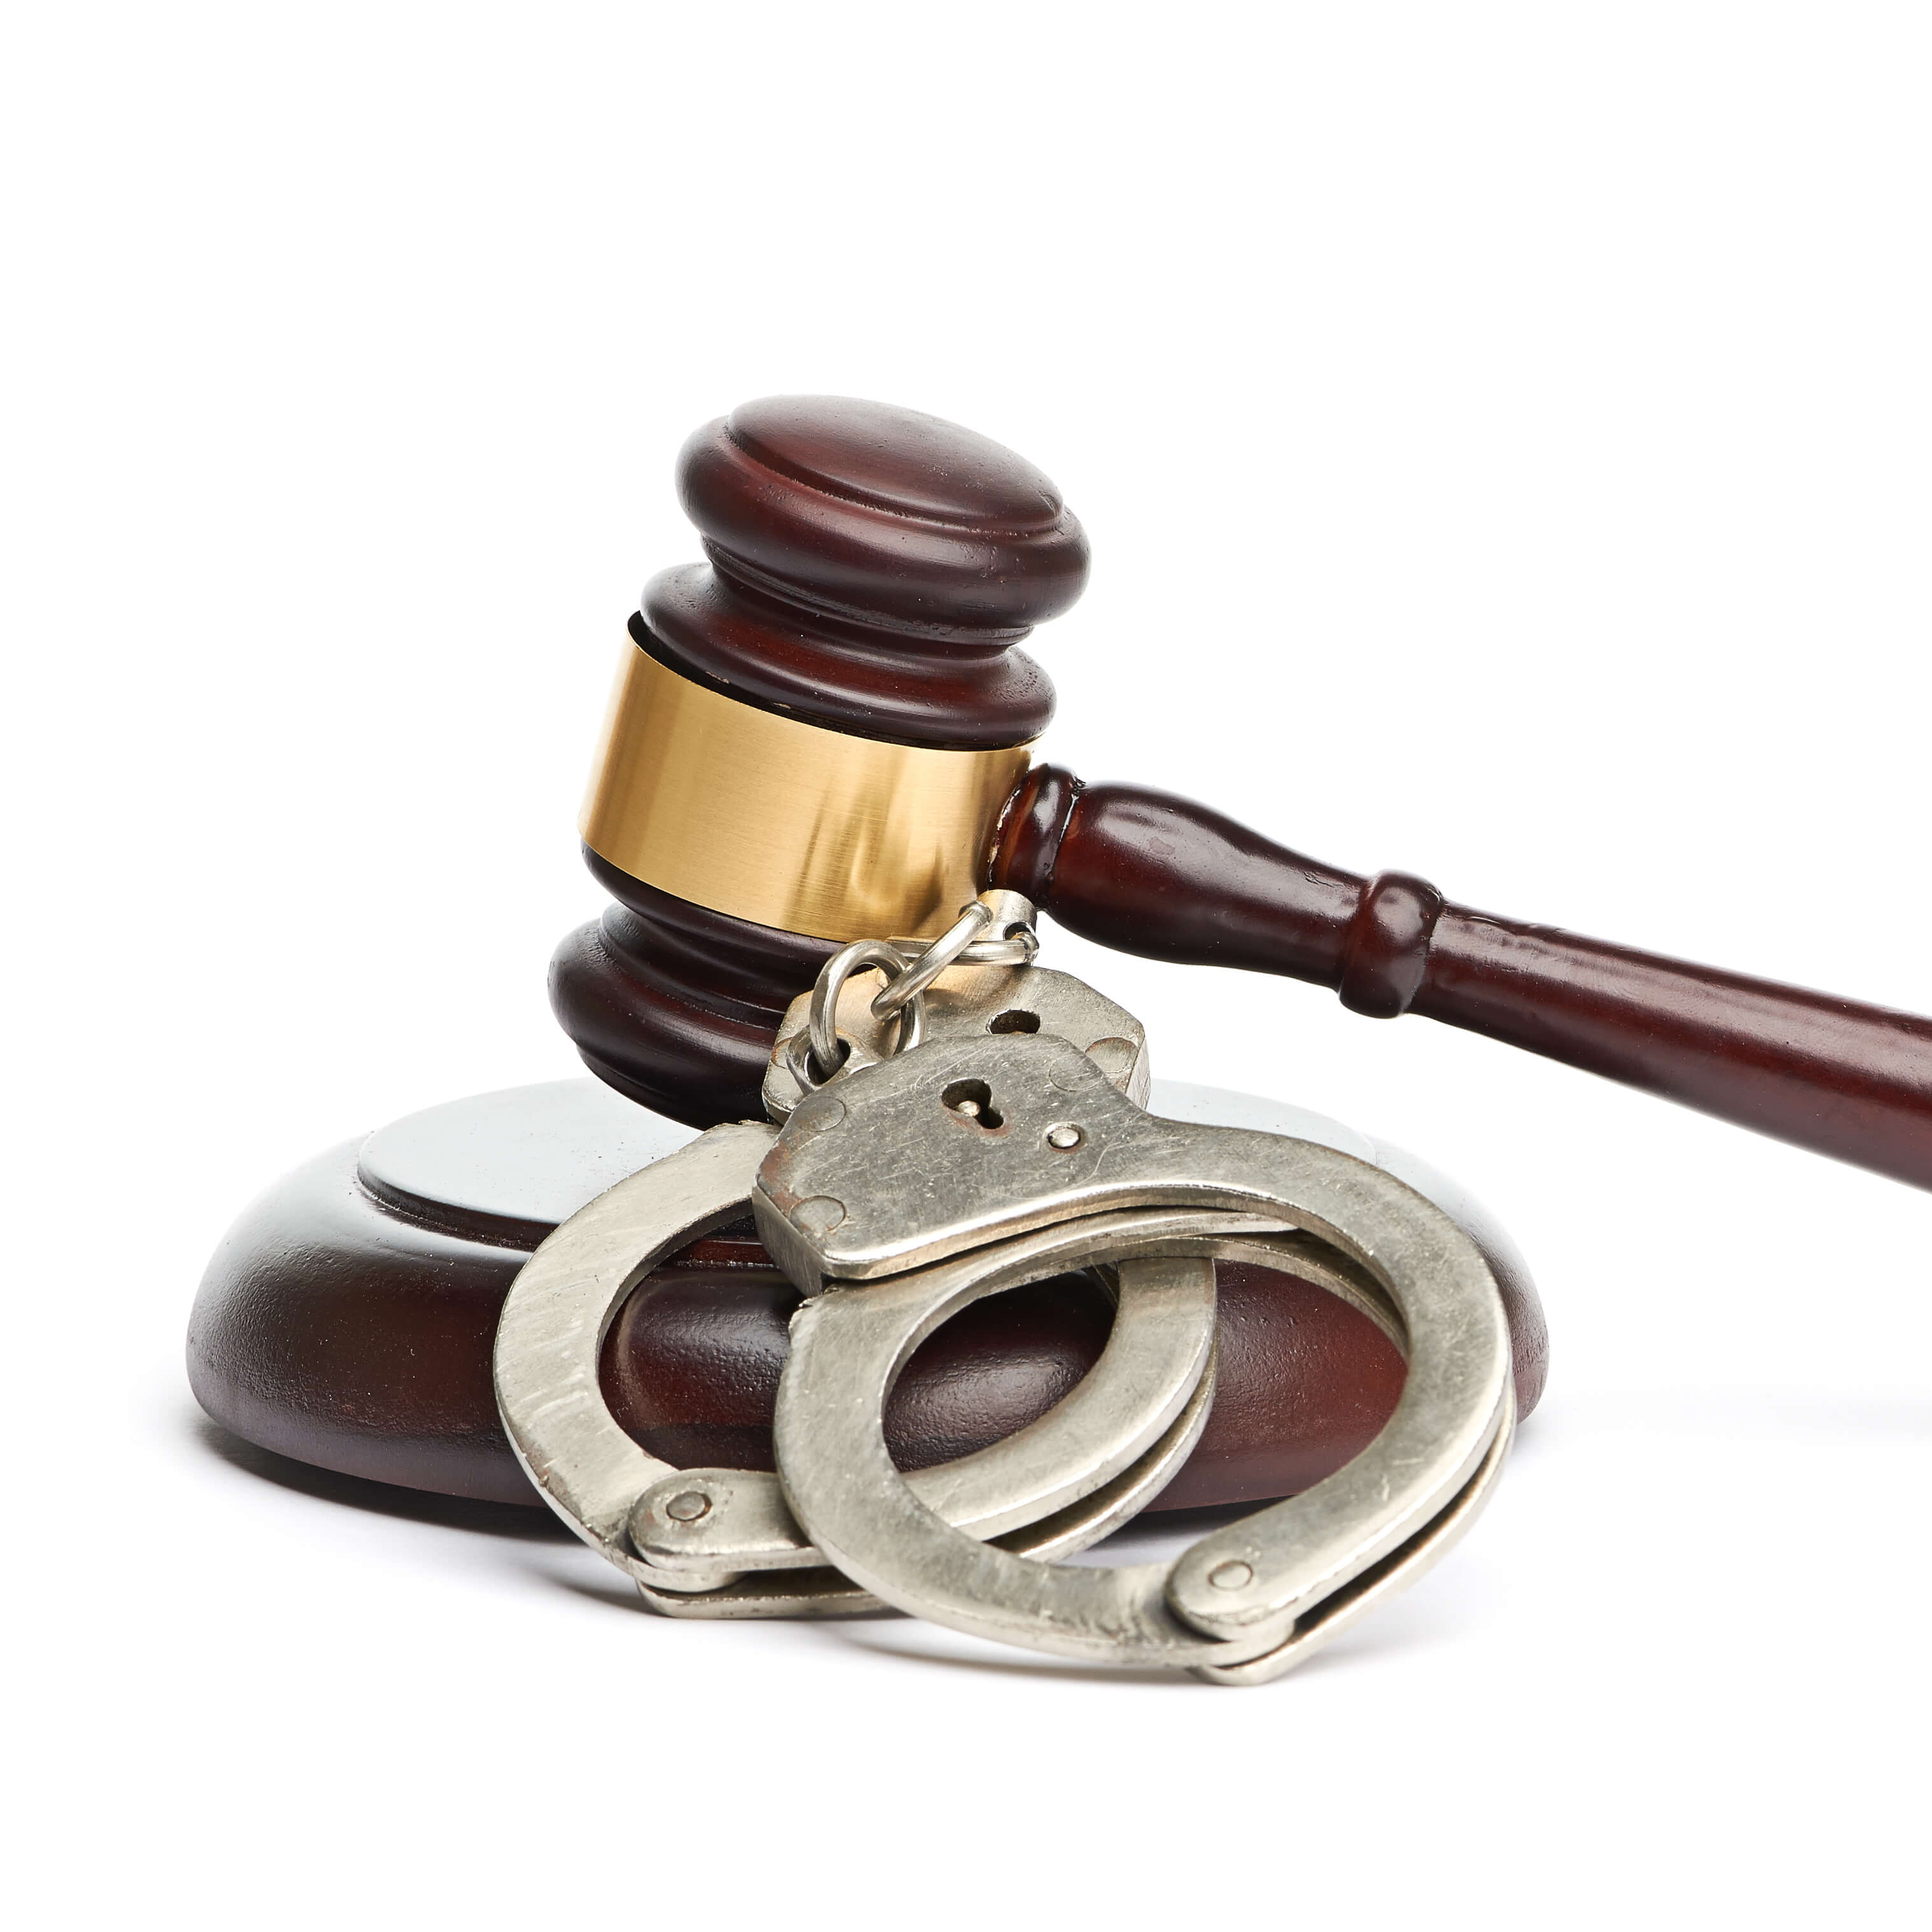 Gavel and handcuffs - felony misdemeanor